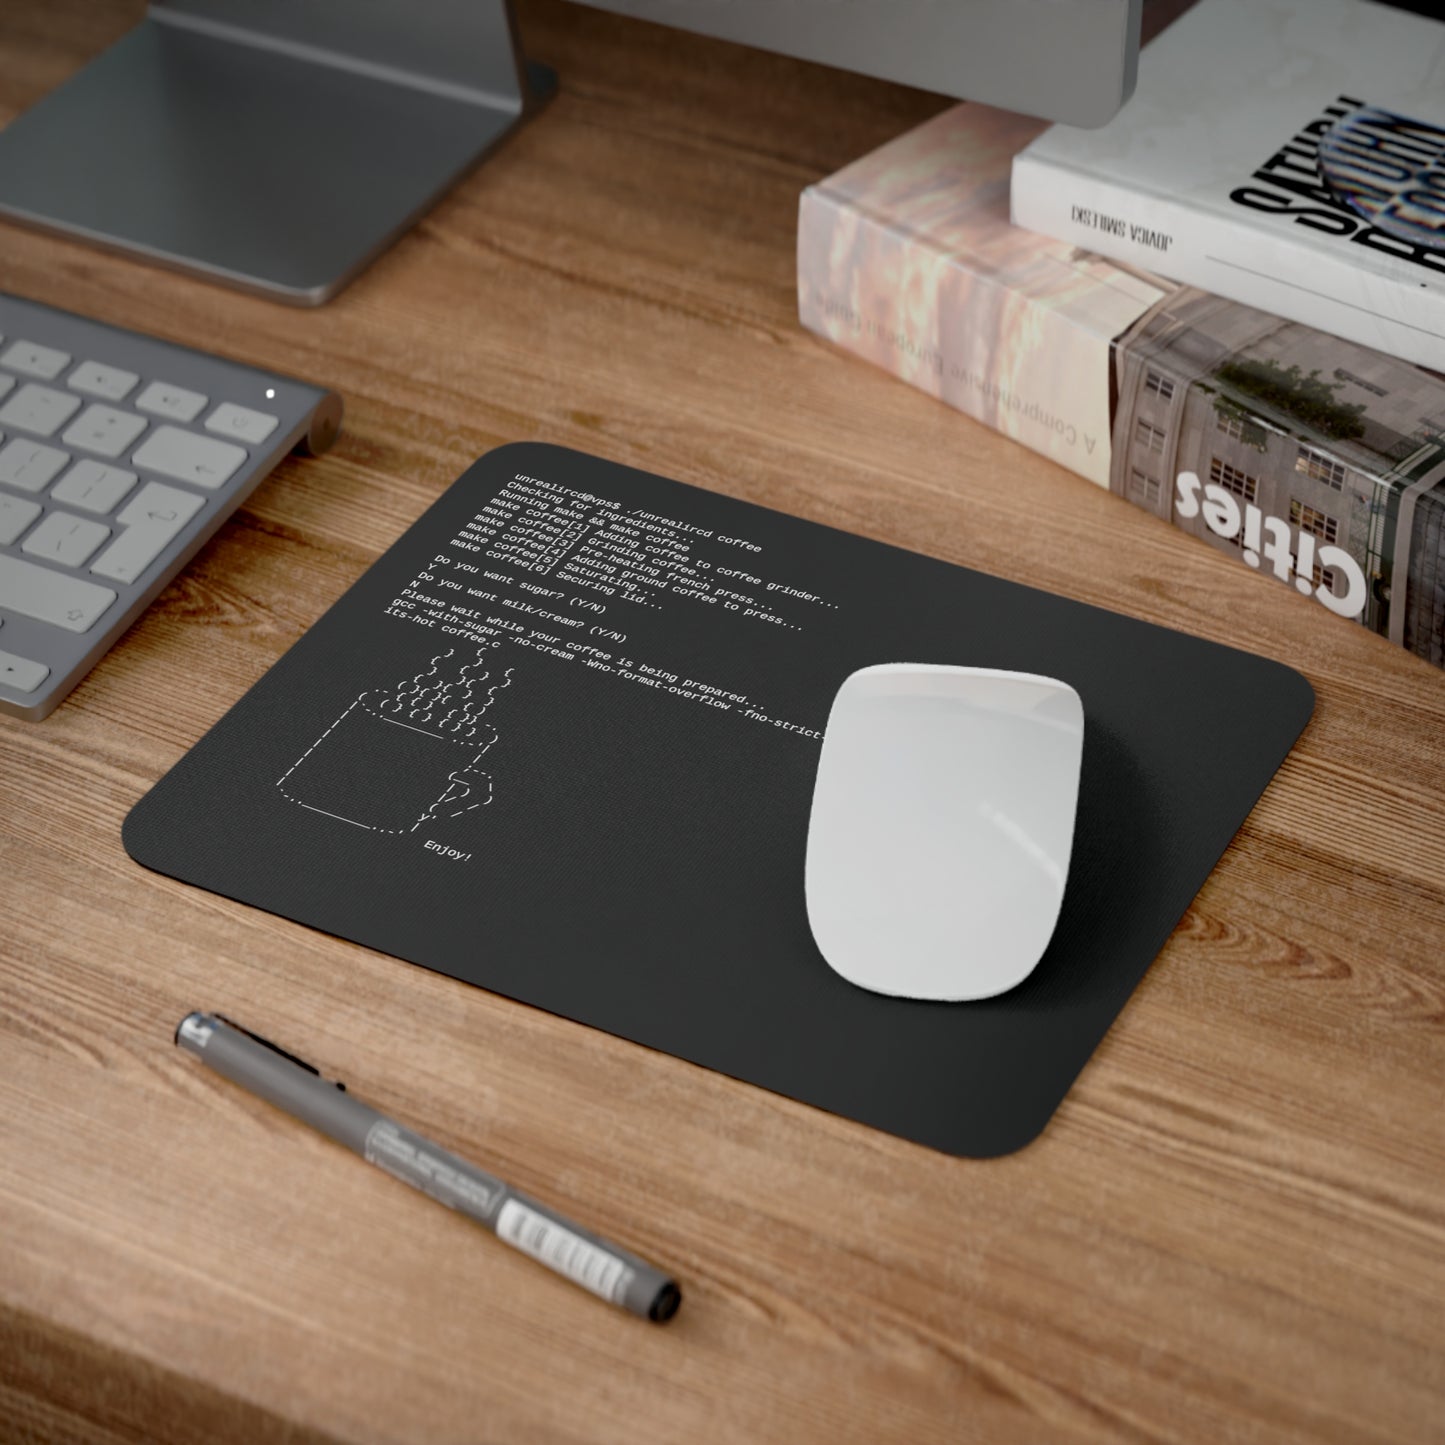 Mouse Pad - UnrealIRCd Makes Coffee Print